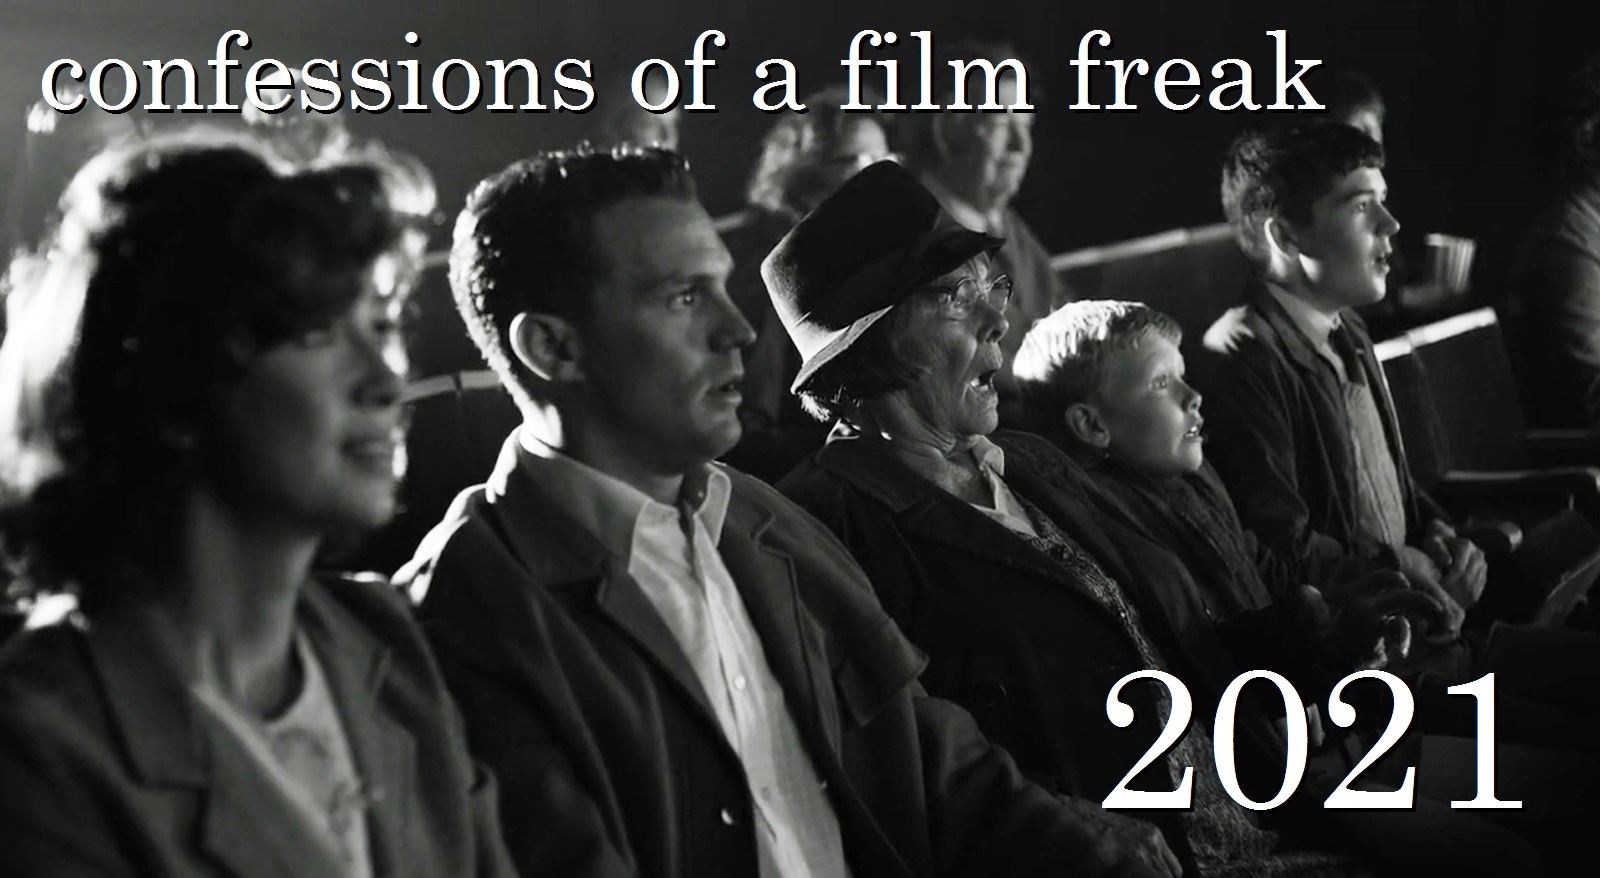 Confessions of a Film Freak film freedonia